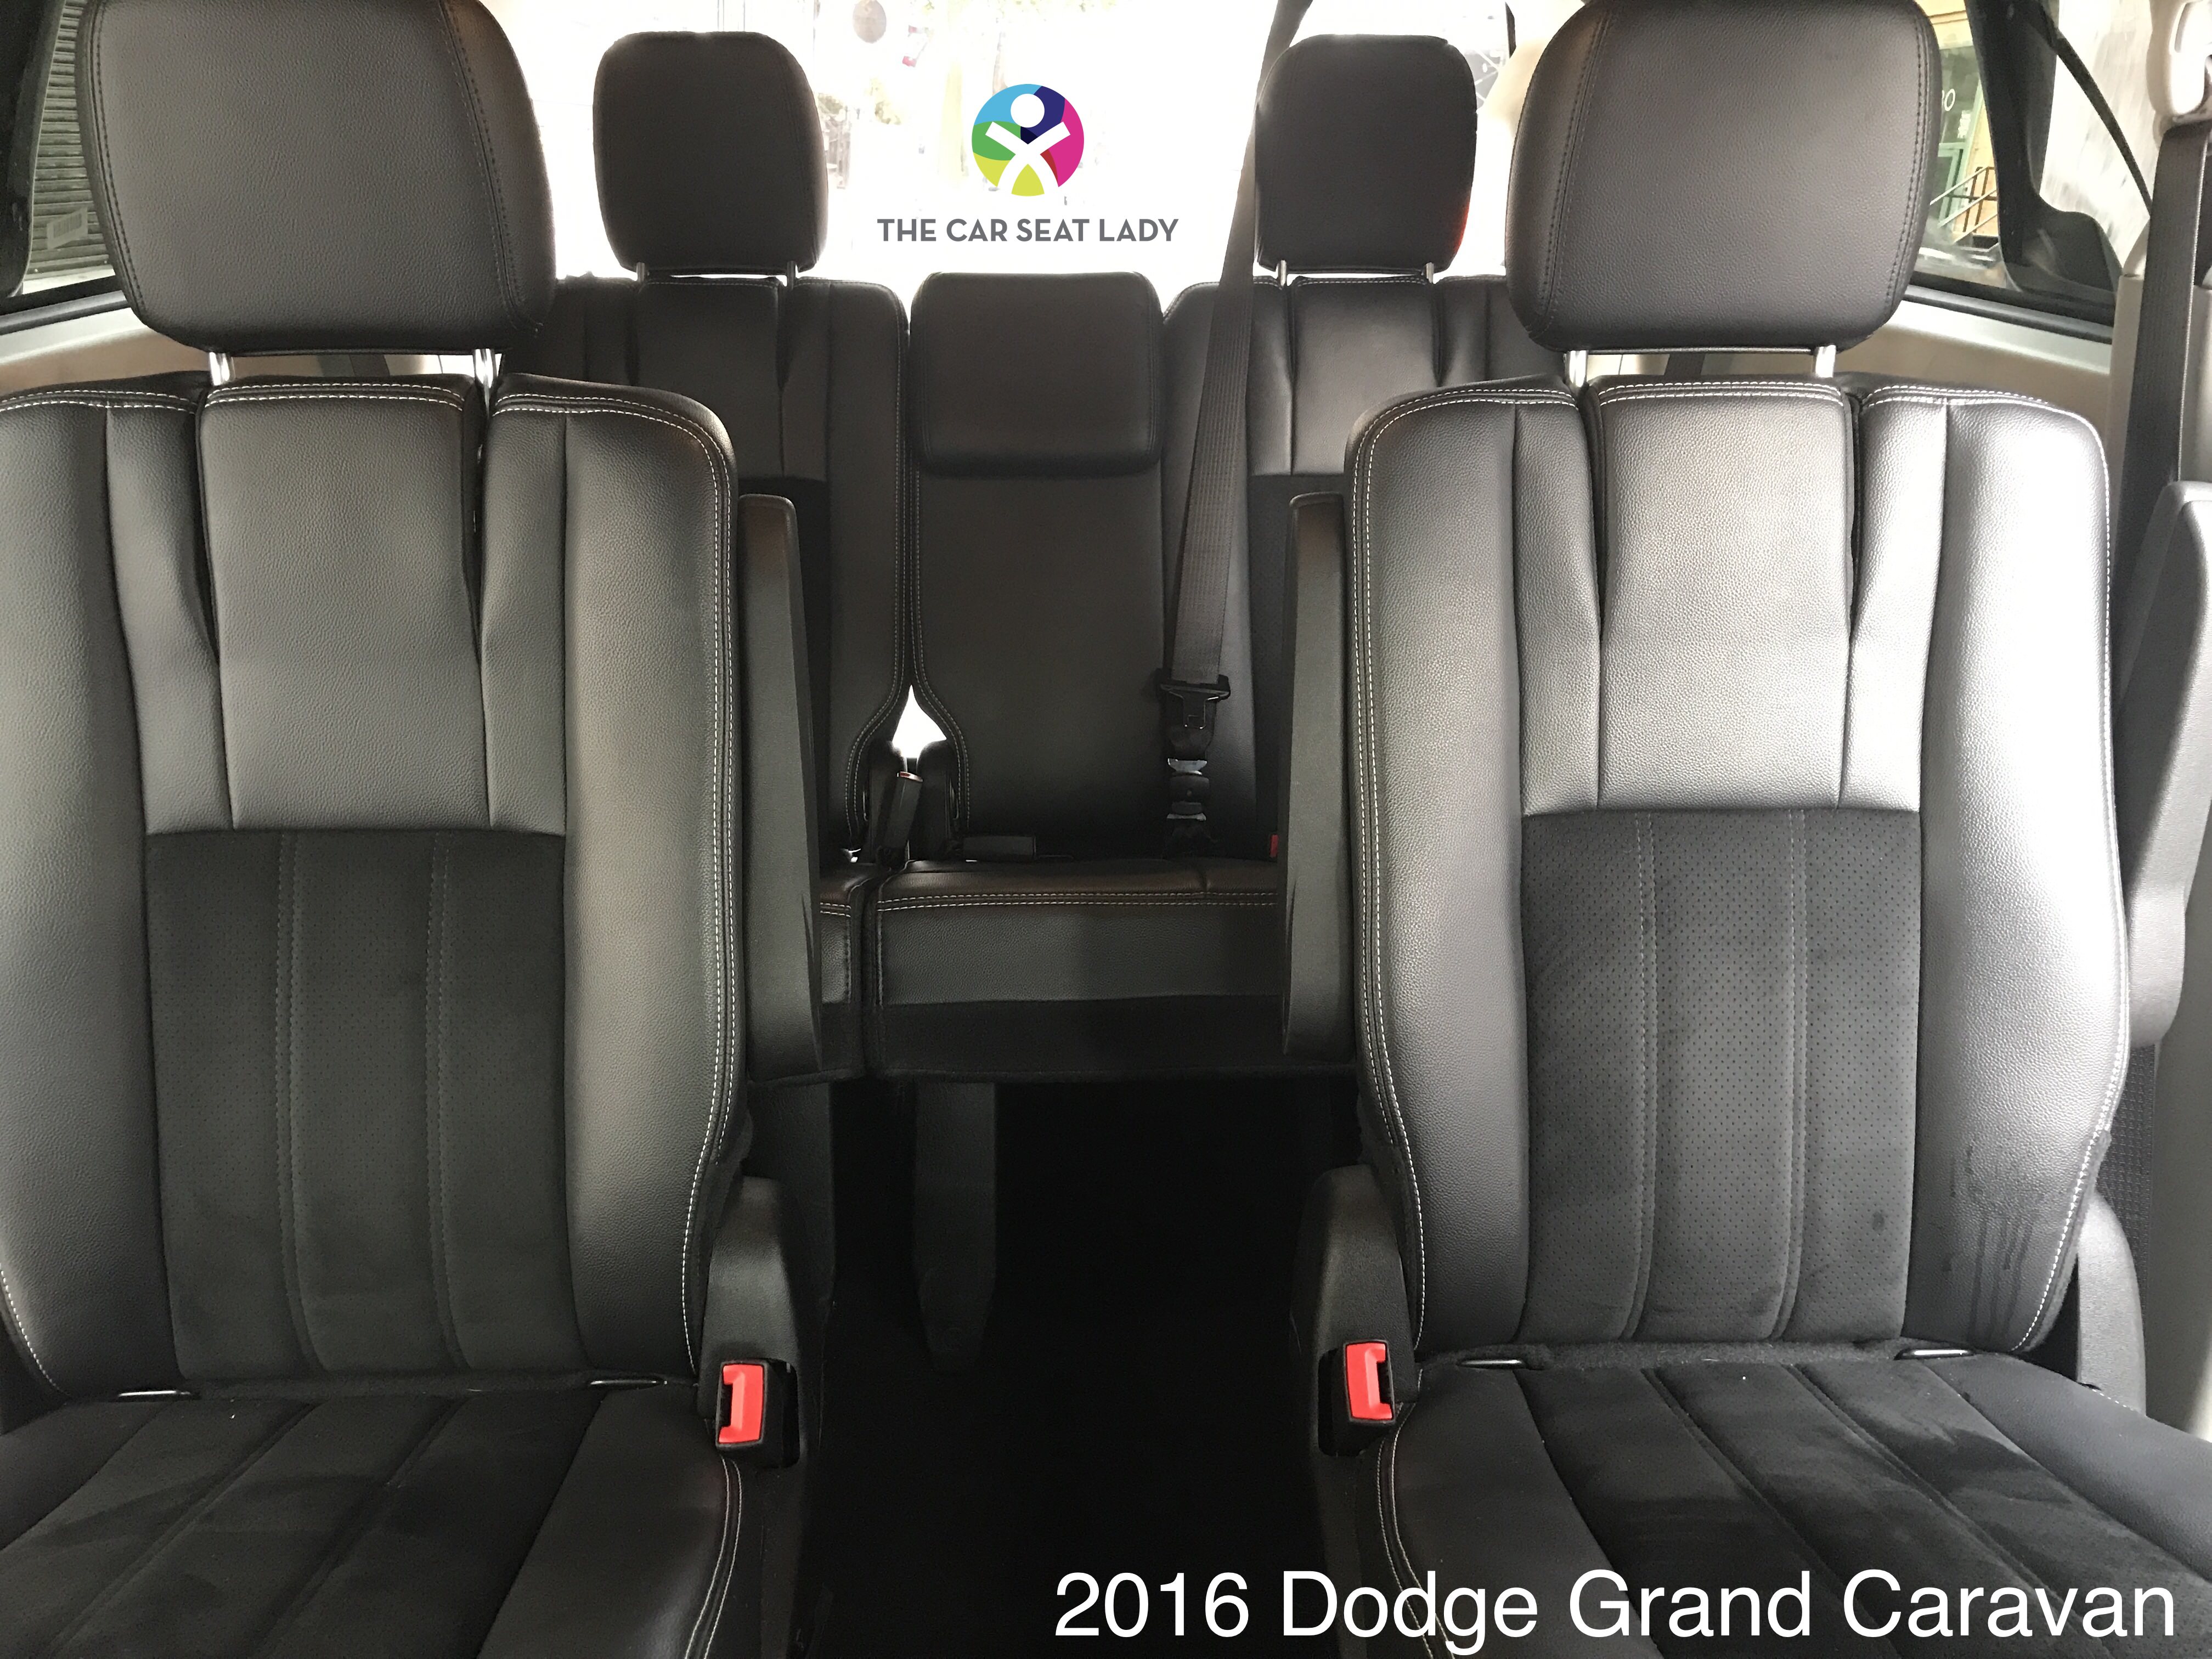 The Car Seat LadyDodge Grand Caravan - The Car Seat Lady